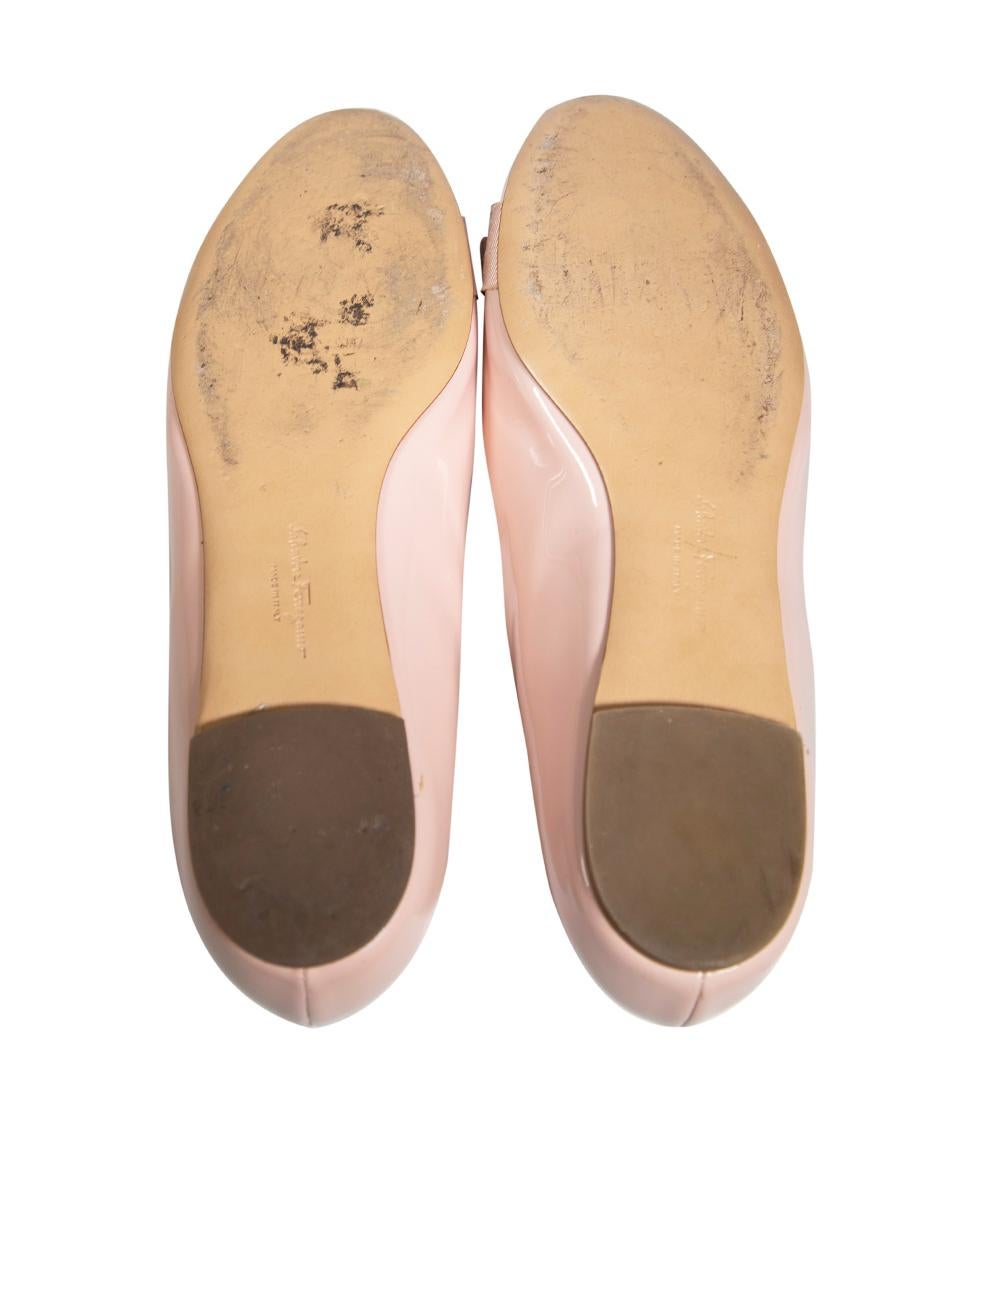 Women's Salvatore Ferragamo Pink Patent Varina Ballet Flats Size US 7.5